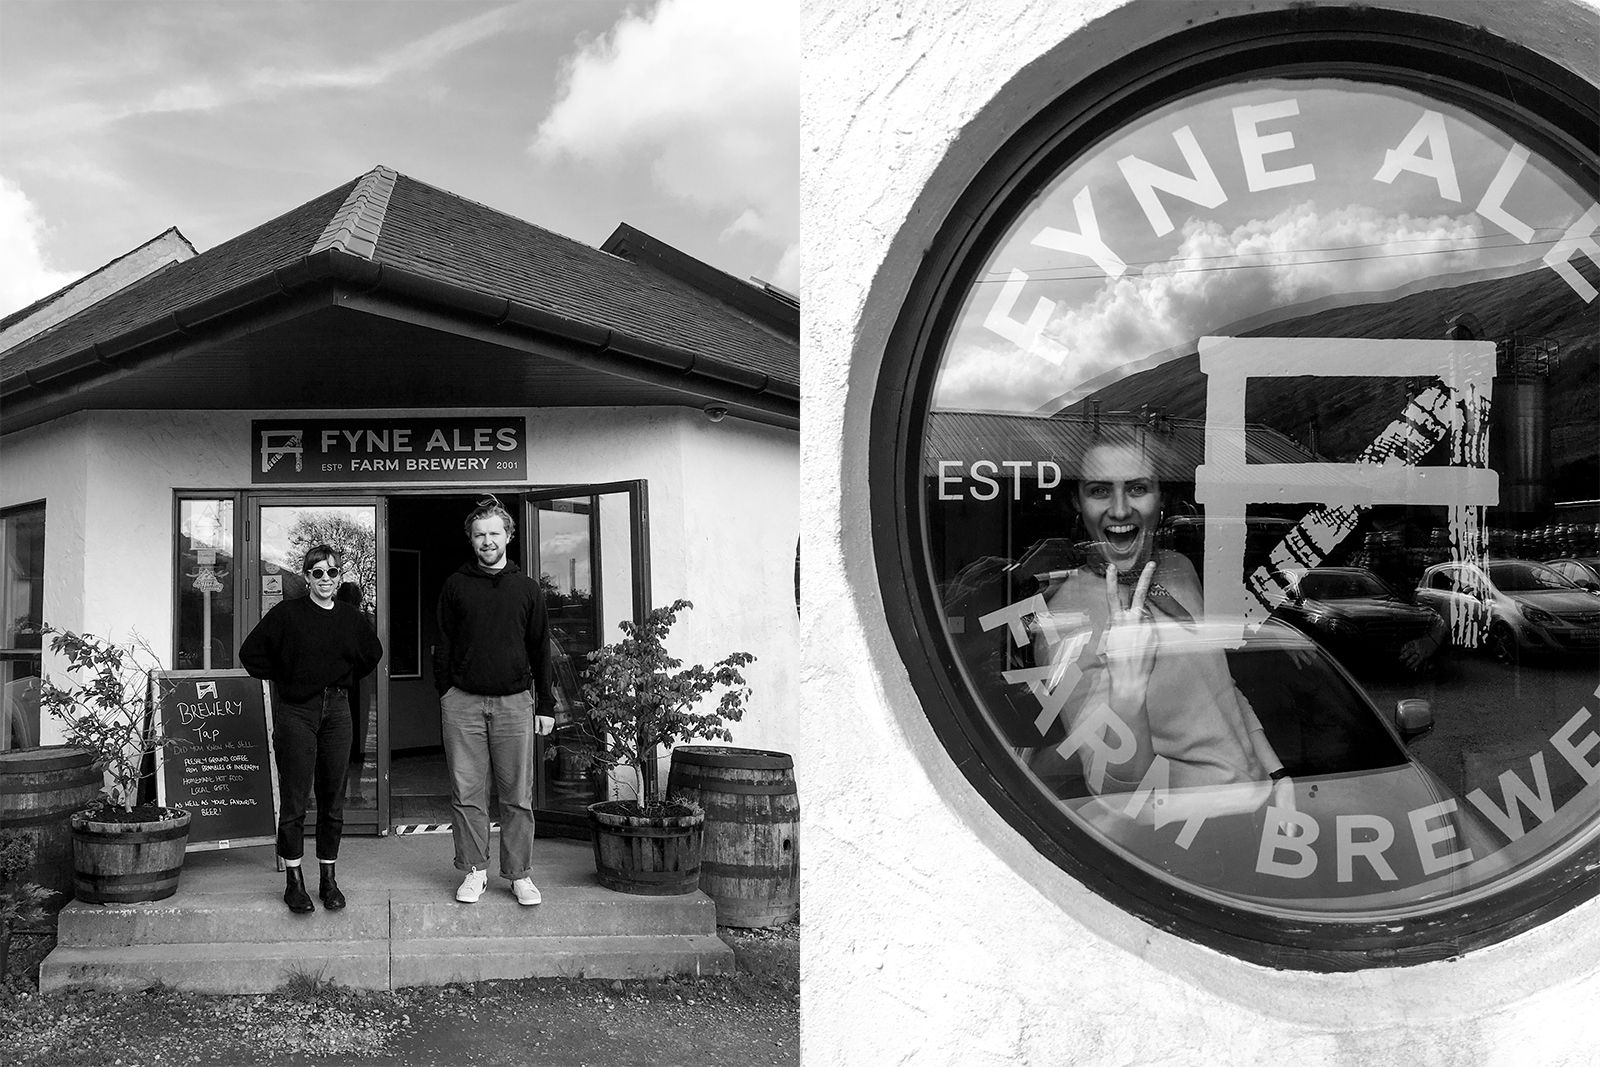 O Street's 2019 Fishing Trip to Loch Fyne (Left) 2 people standing outside Fyne Ales Farm Brewery Shop. (Right) Tessa in the Fyne Ales Farm Brewery Window.